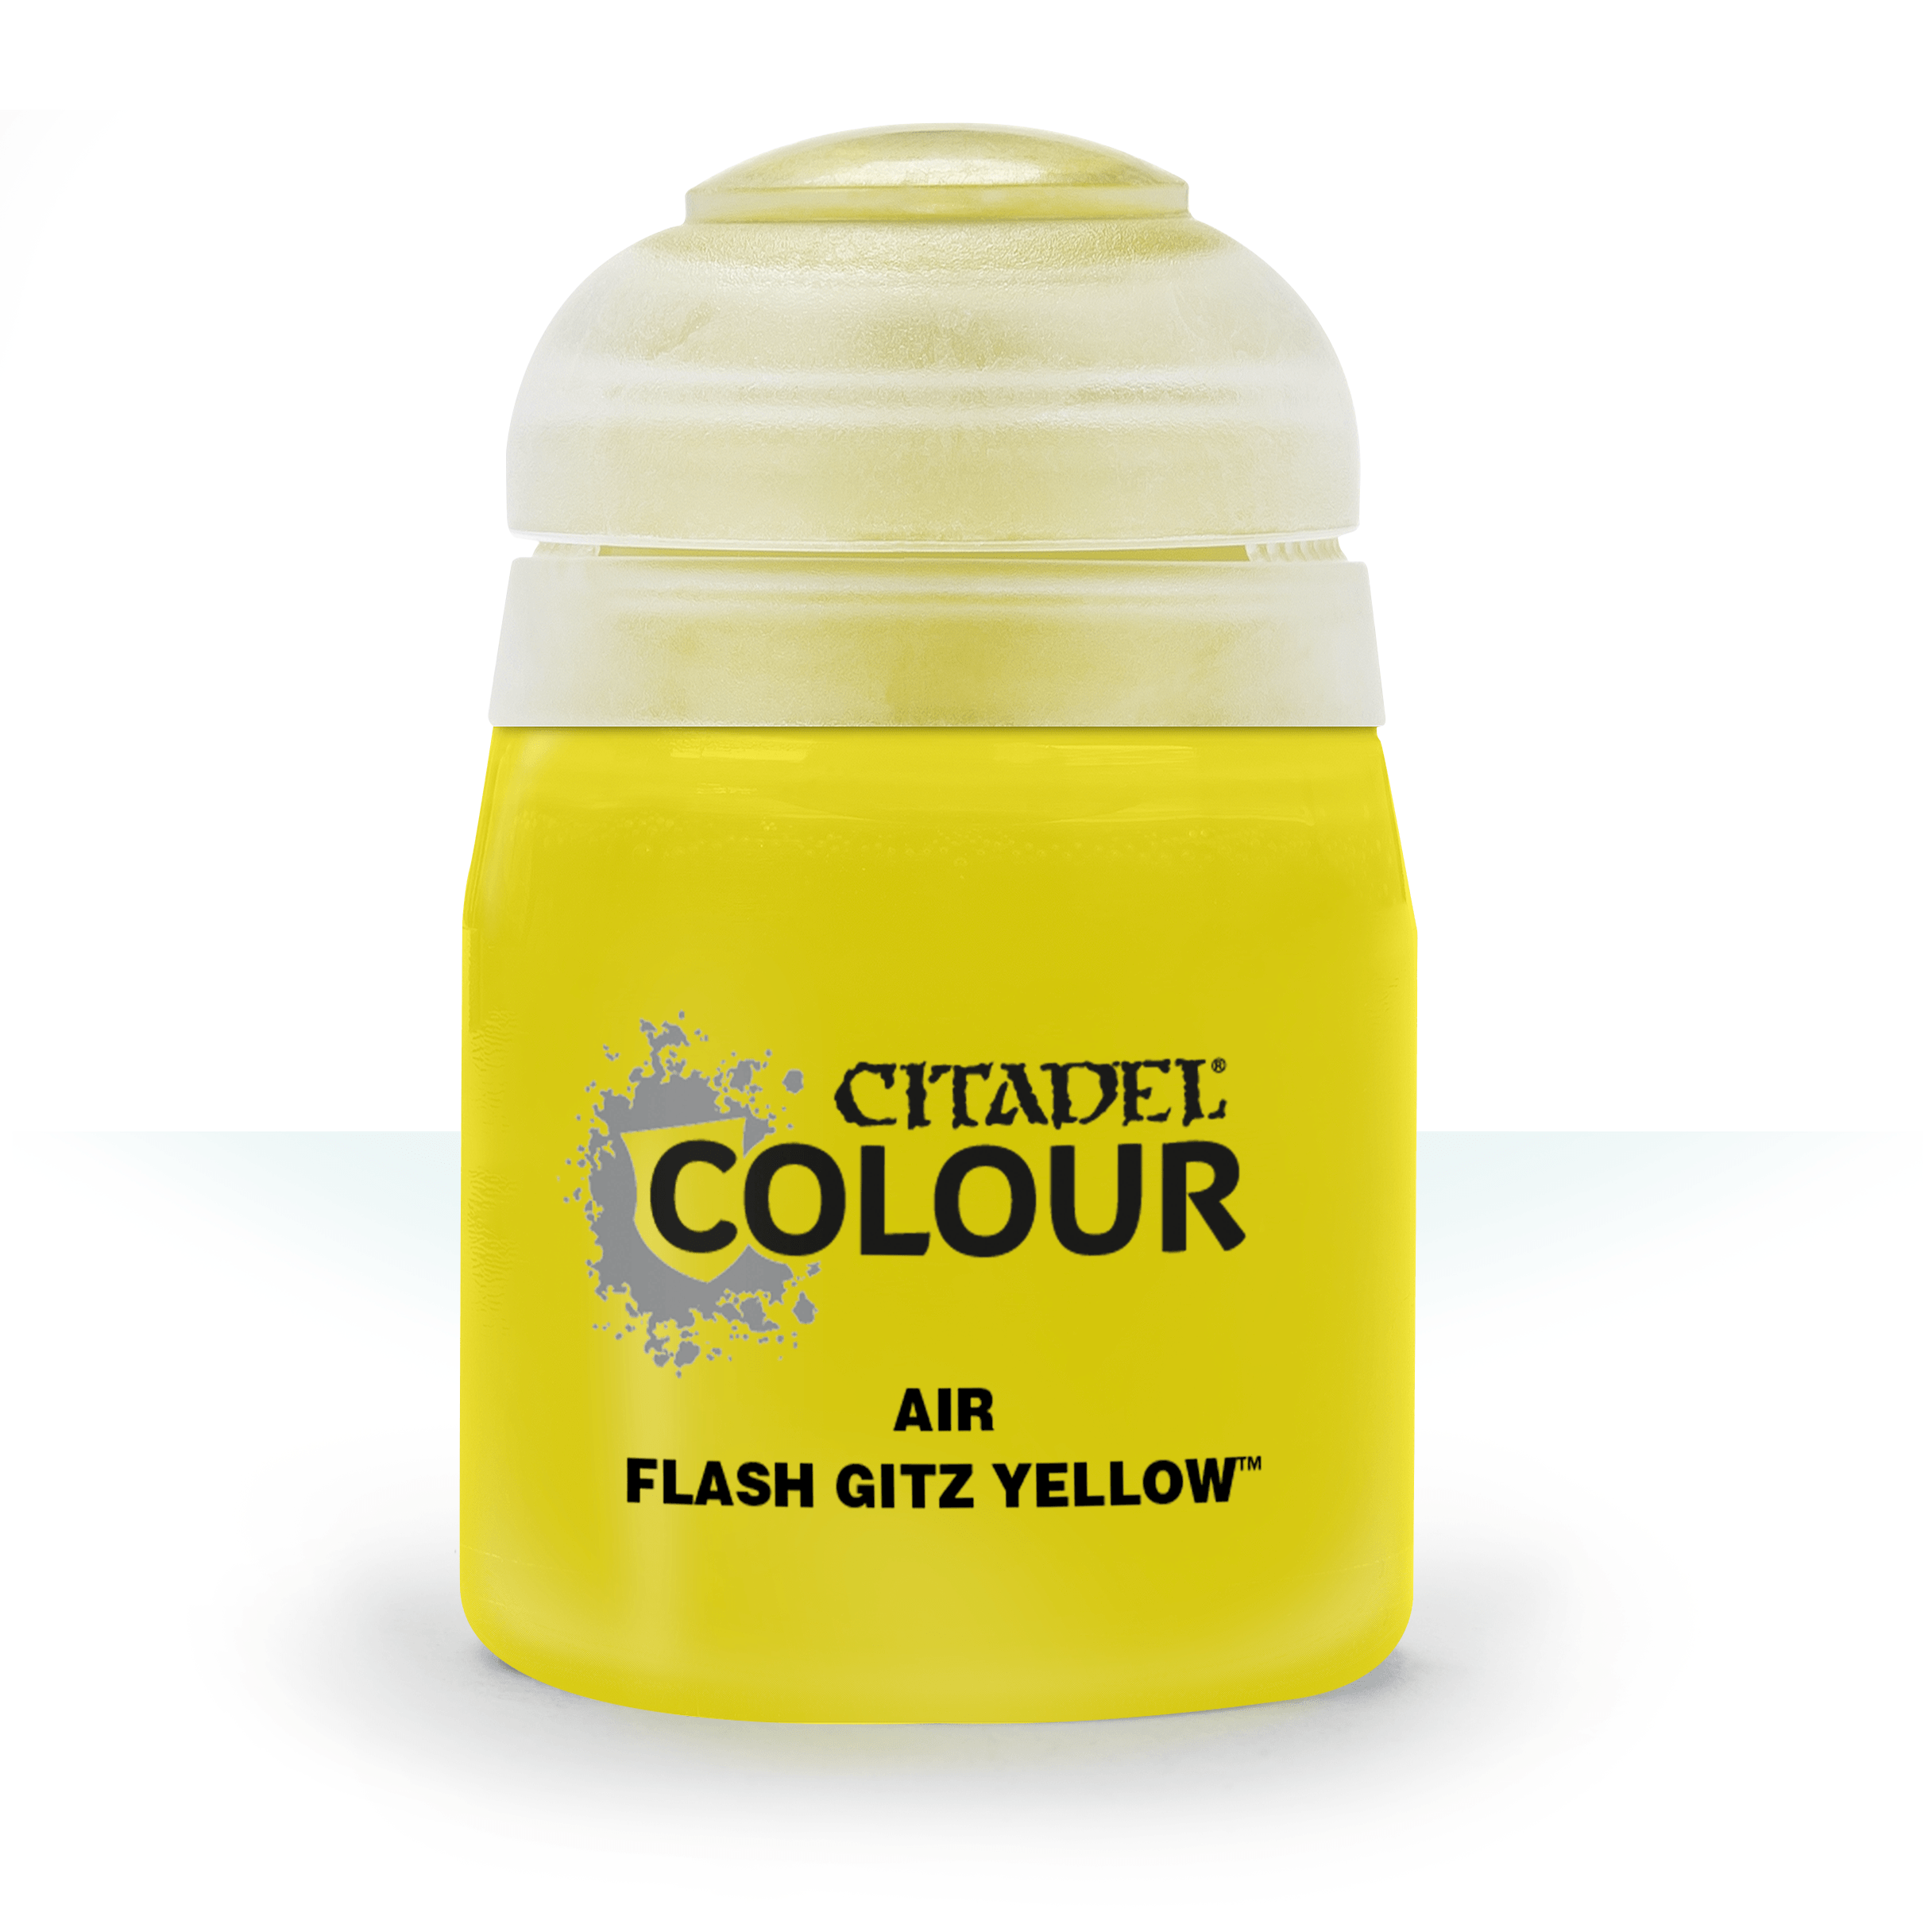 Air Flash Gitz Yellow - Citadel Colour - 24 ml